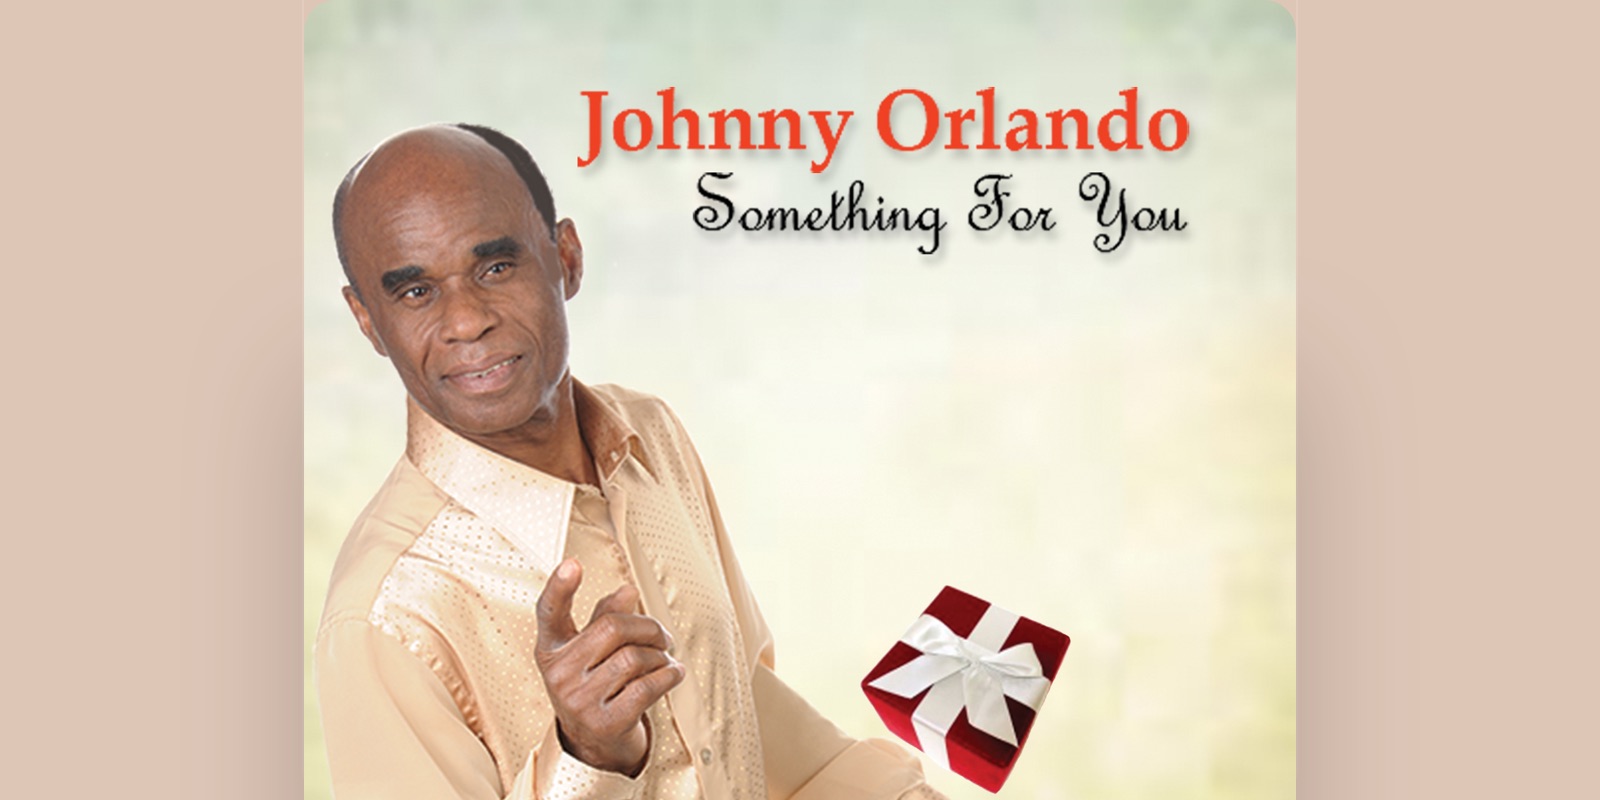 Konser Johnny Orlando Mendatang & Tiket | Shazam